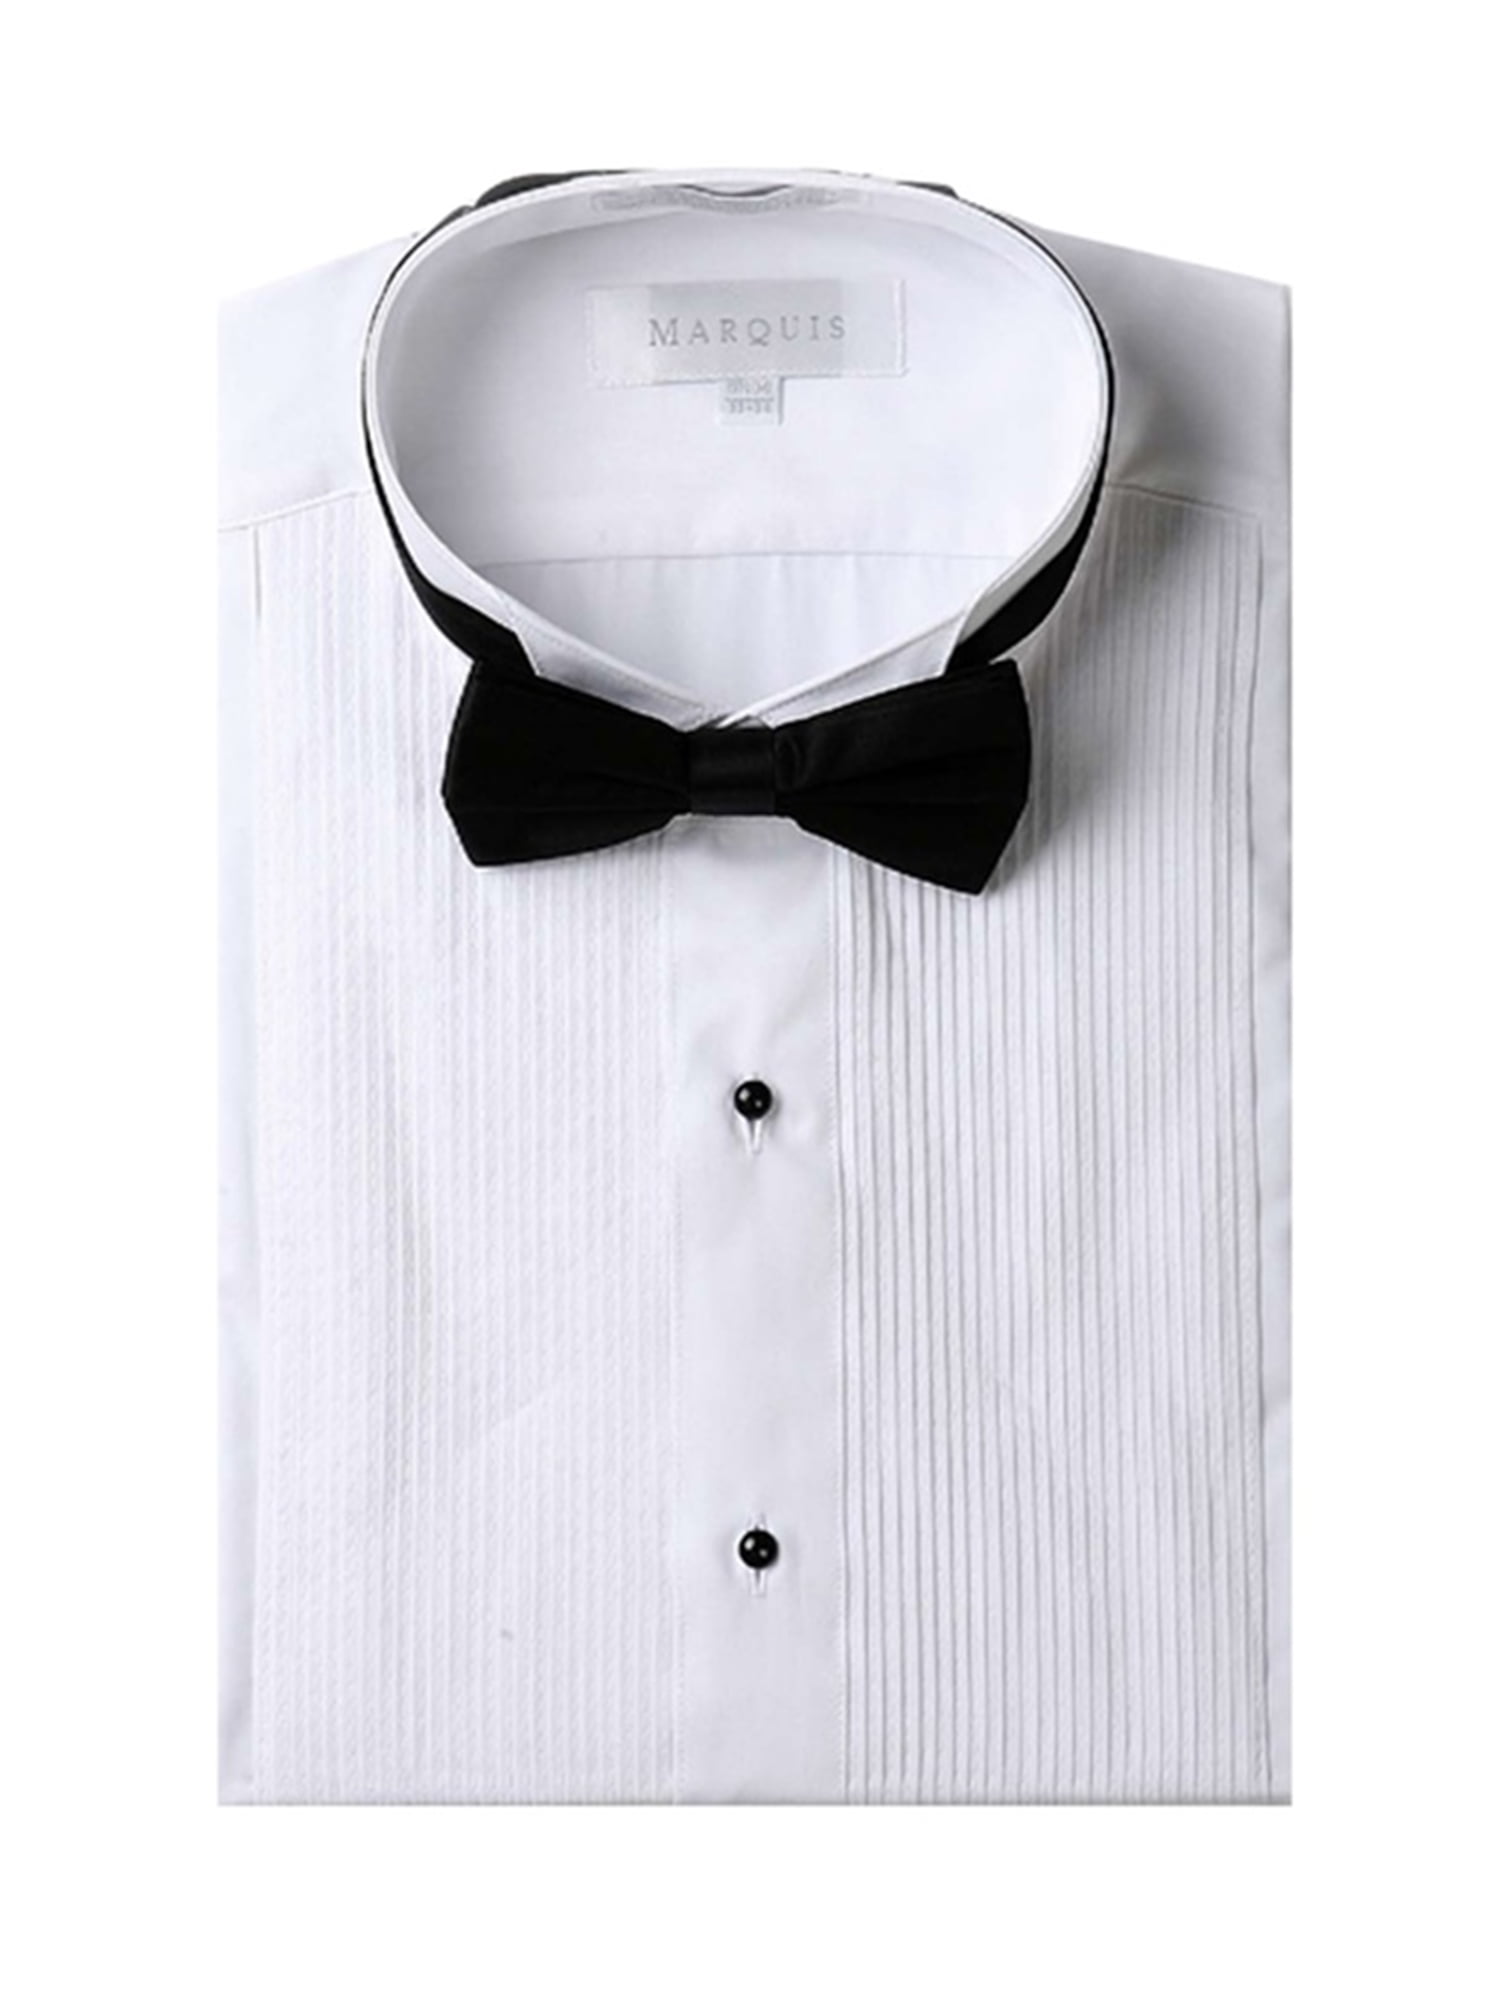 Milani Wing Tip Collar Black or White Tuxedo Shirt Convertible Cuffs w/ Bow Tie